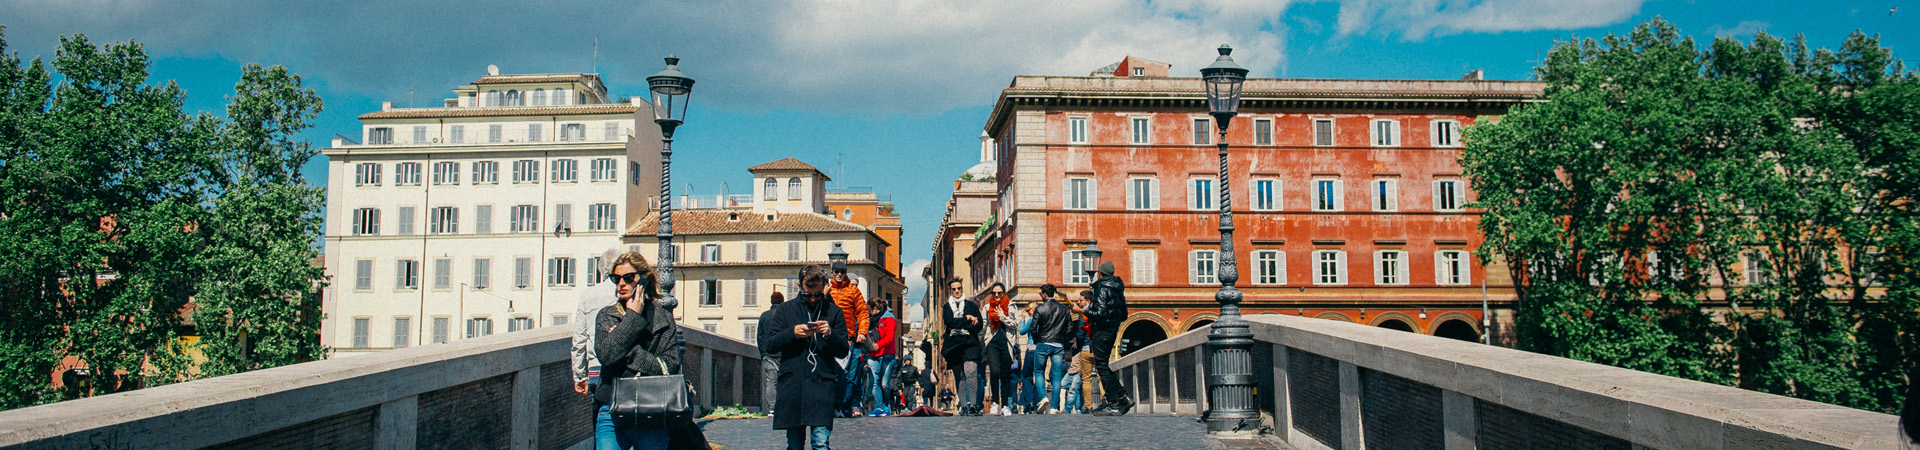 Arrival Information | John Cabot University | Rome, Italy 